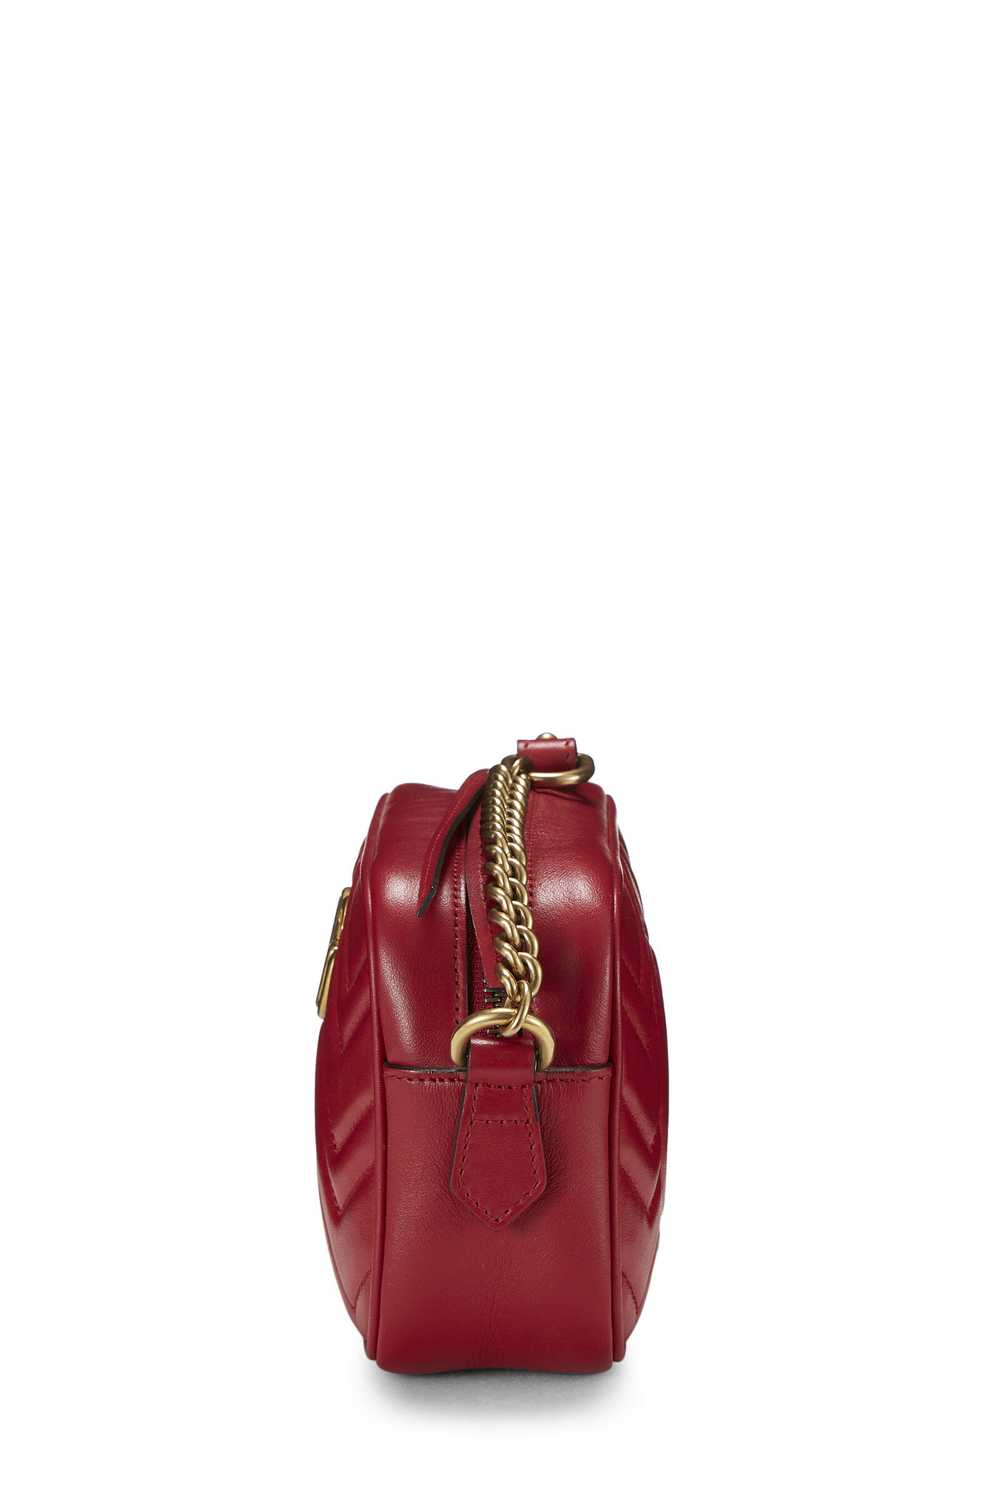 Red Leather GG Marmont Shoulder Bag Mini - image 3